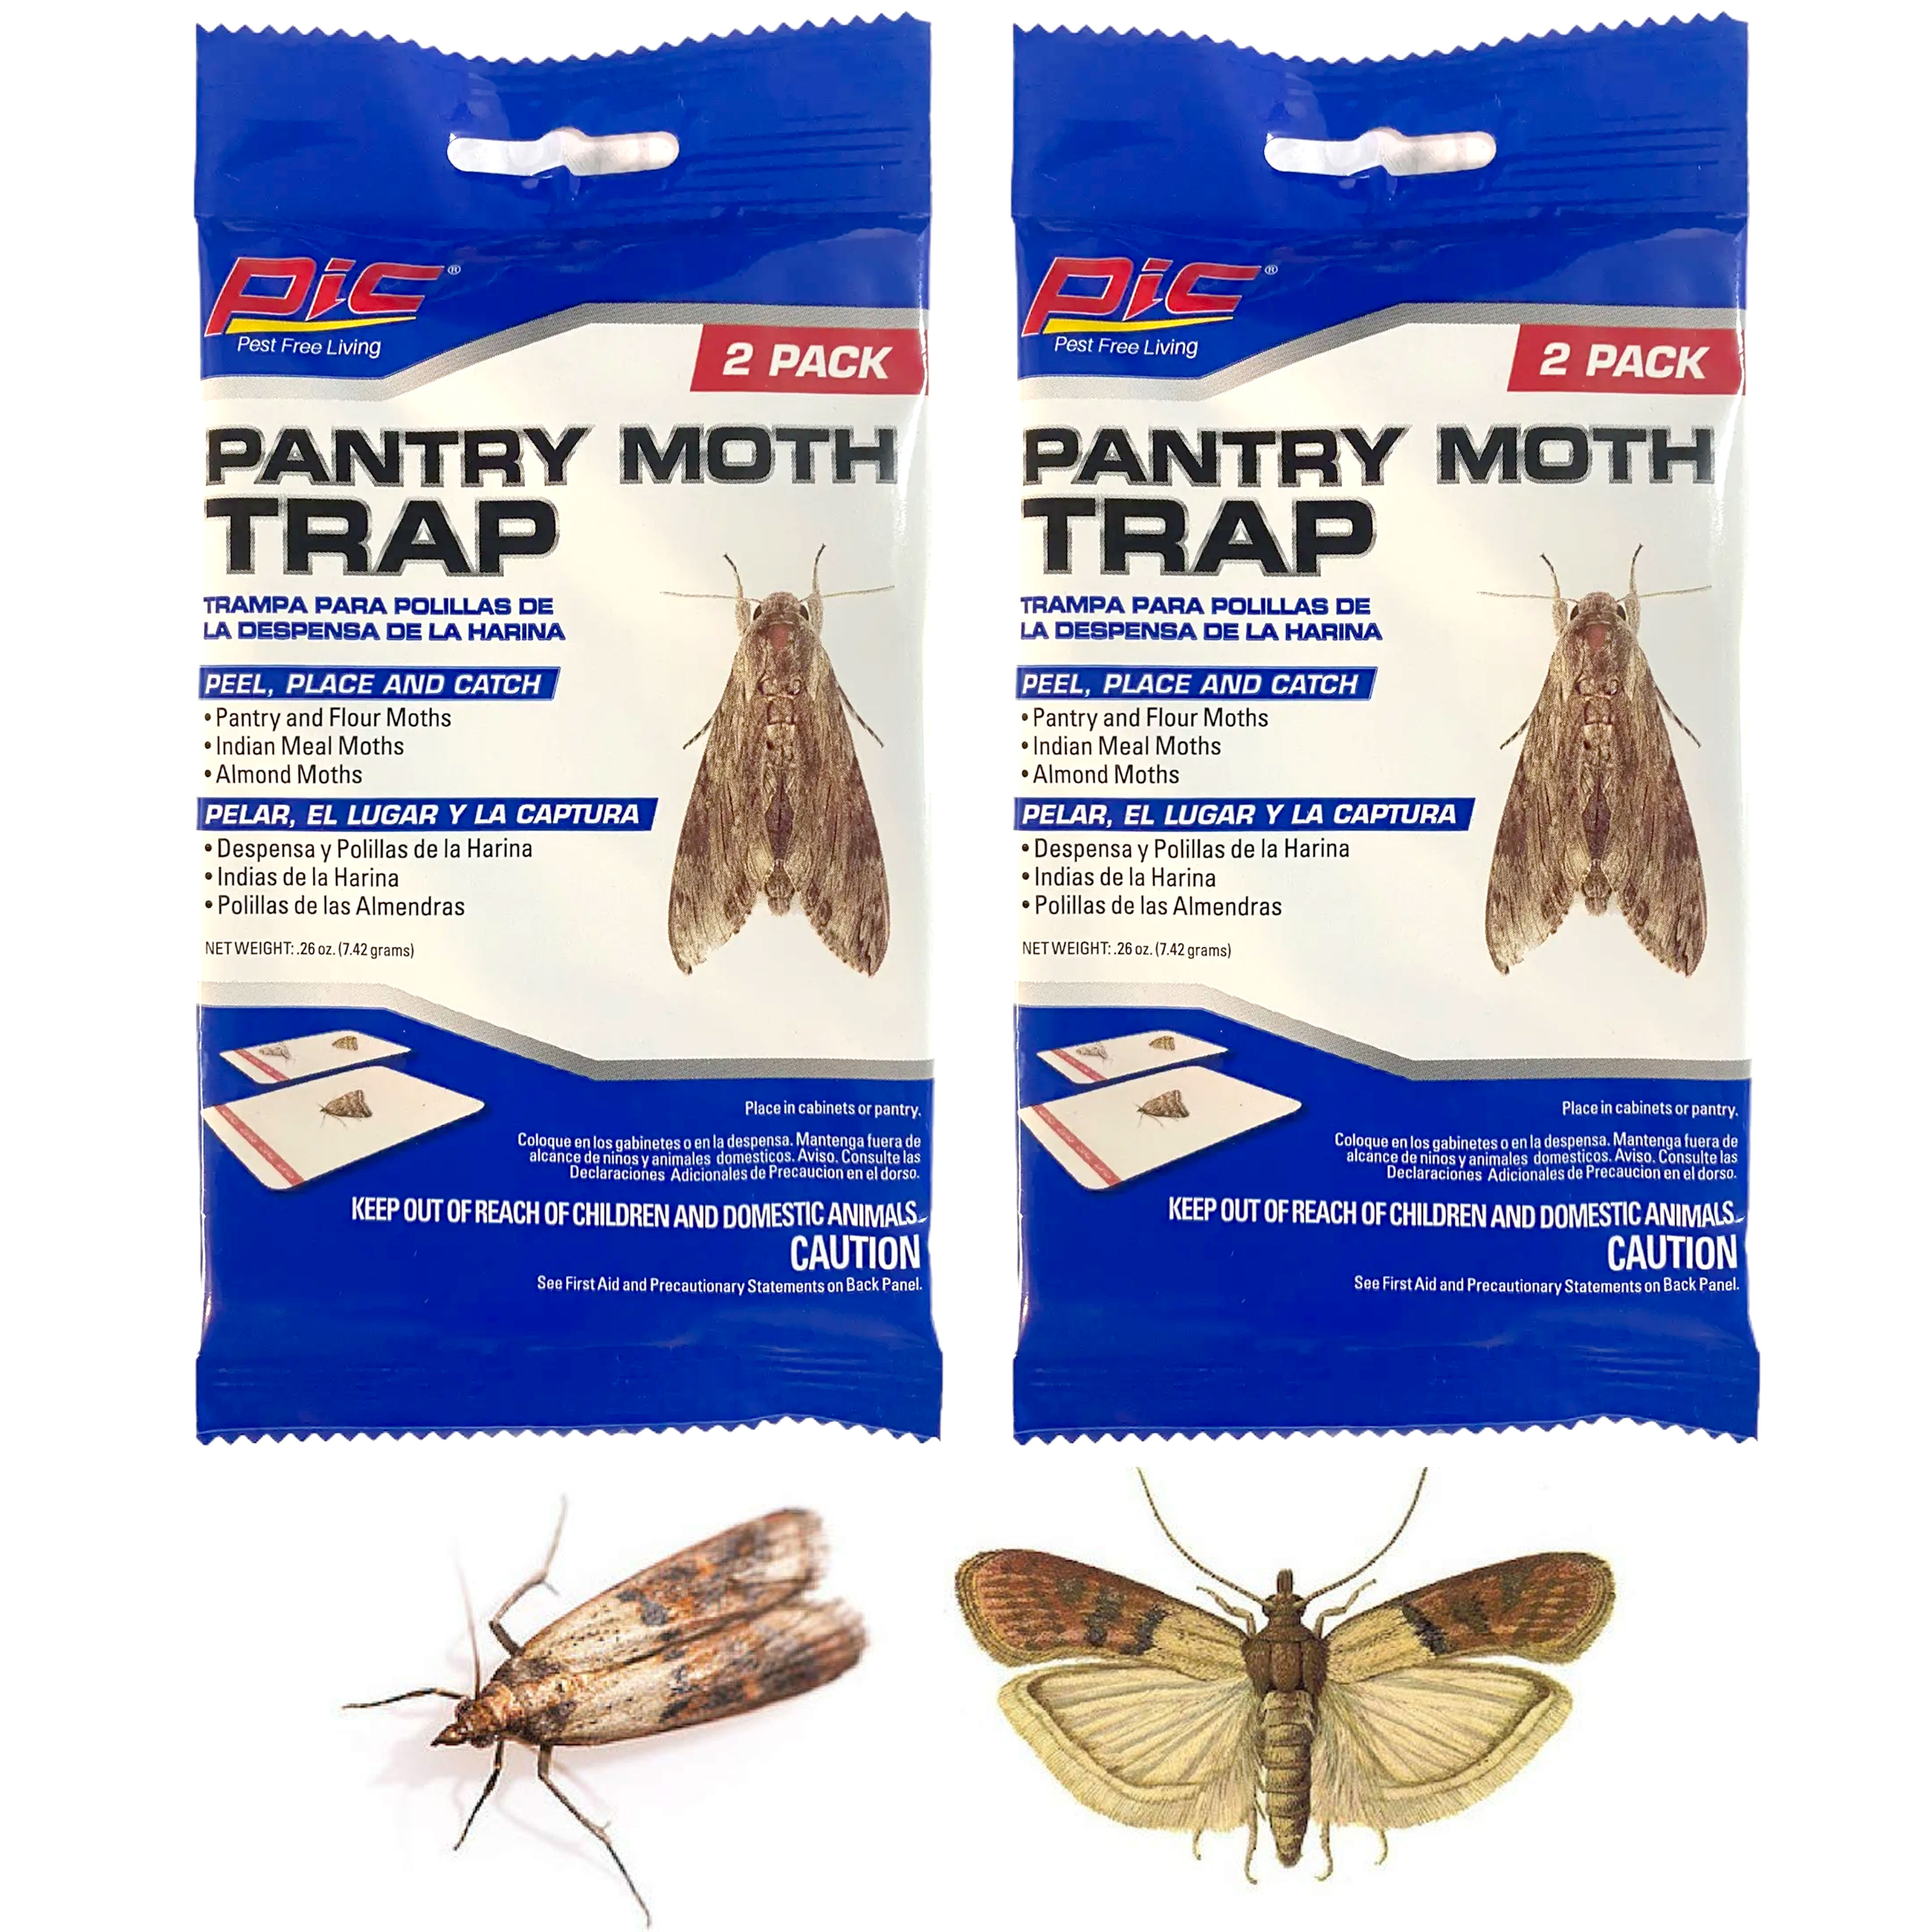 Natural Indoor Clothes Moth Trap (4-Count)